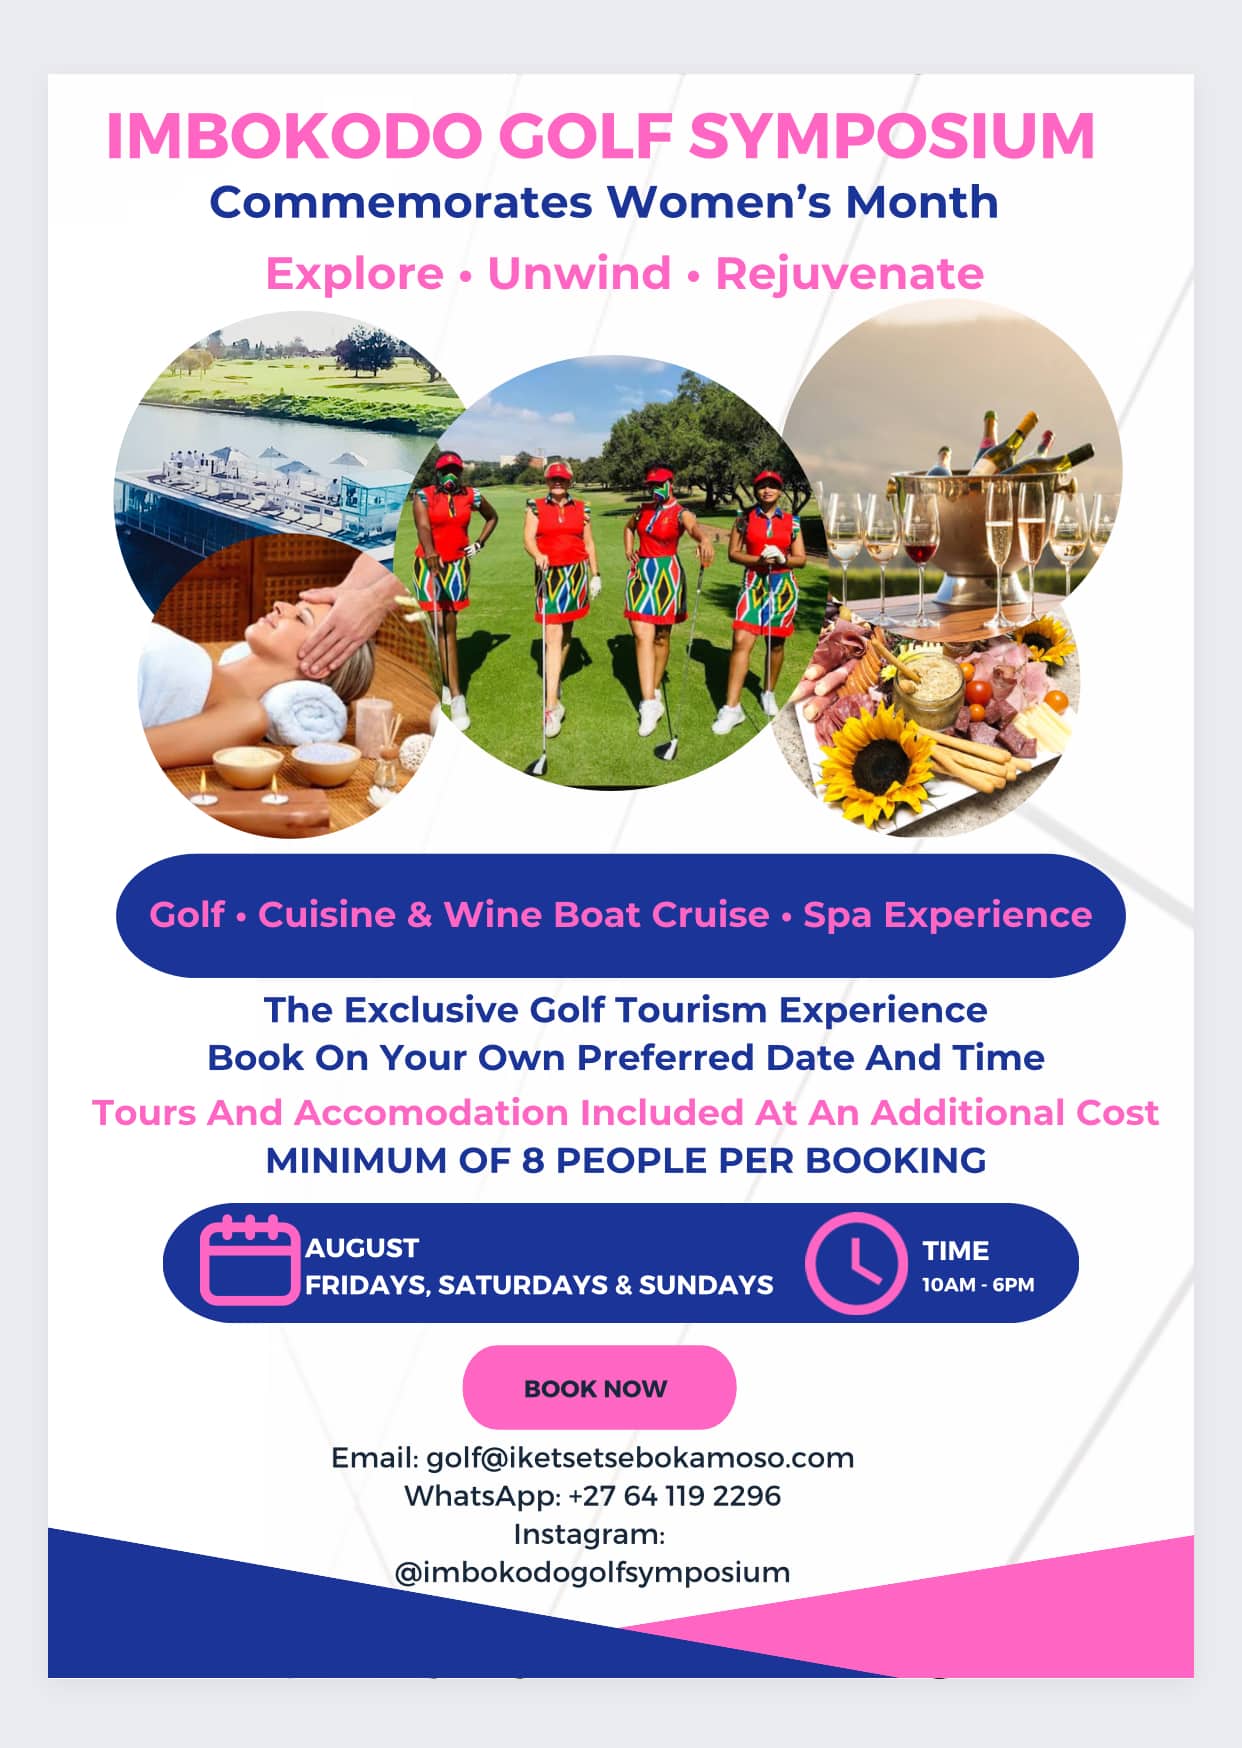 Imbokodo Golf Symposium Exclusive Golf Tourism Experience